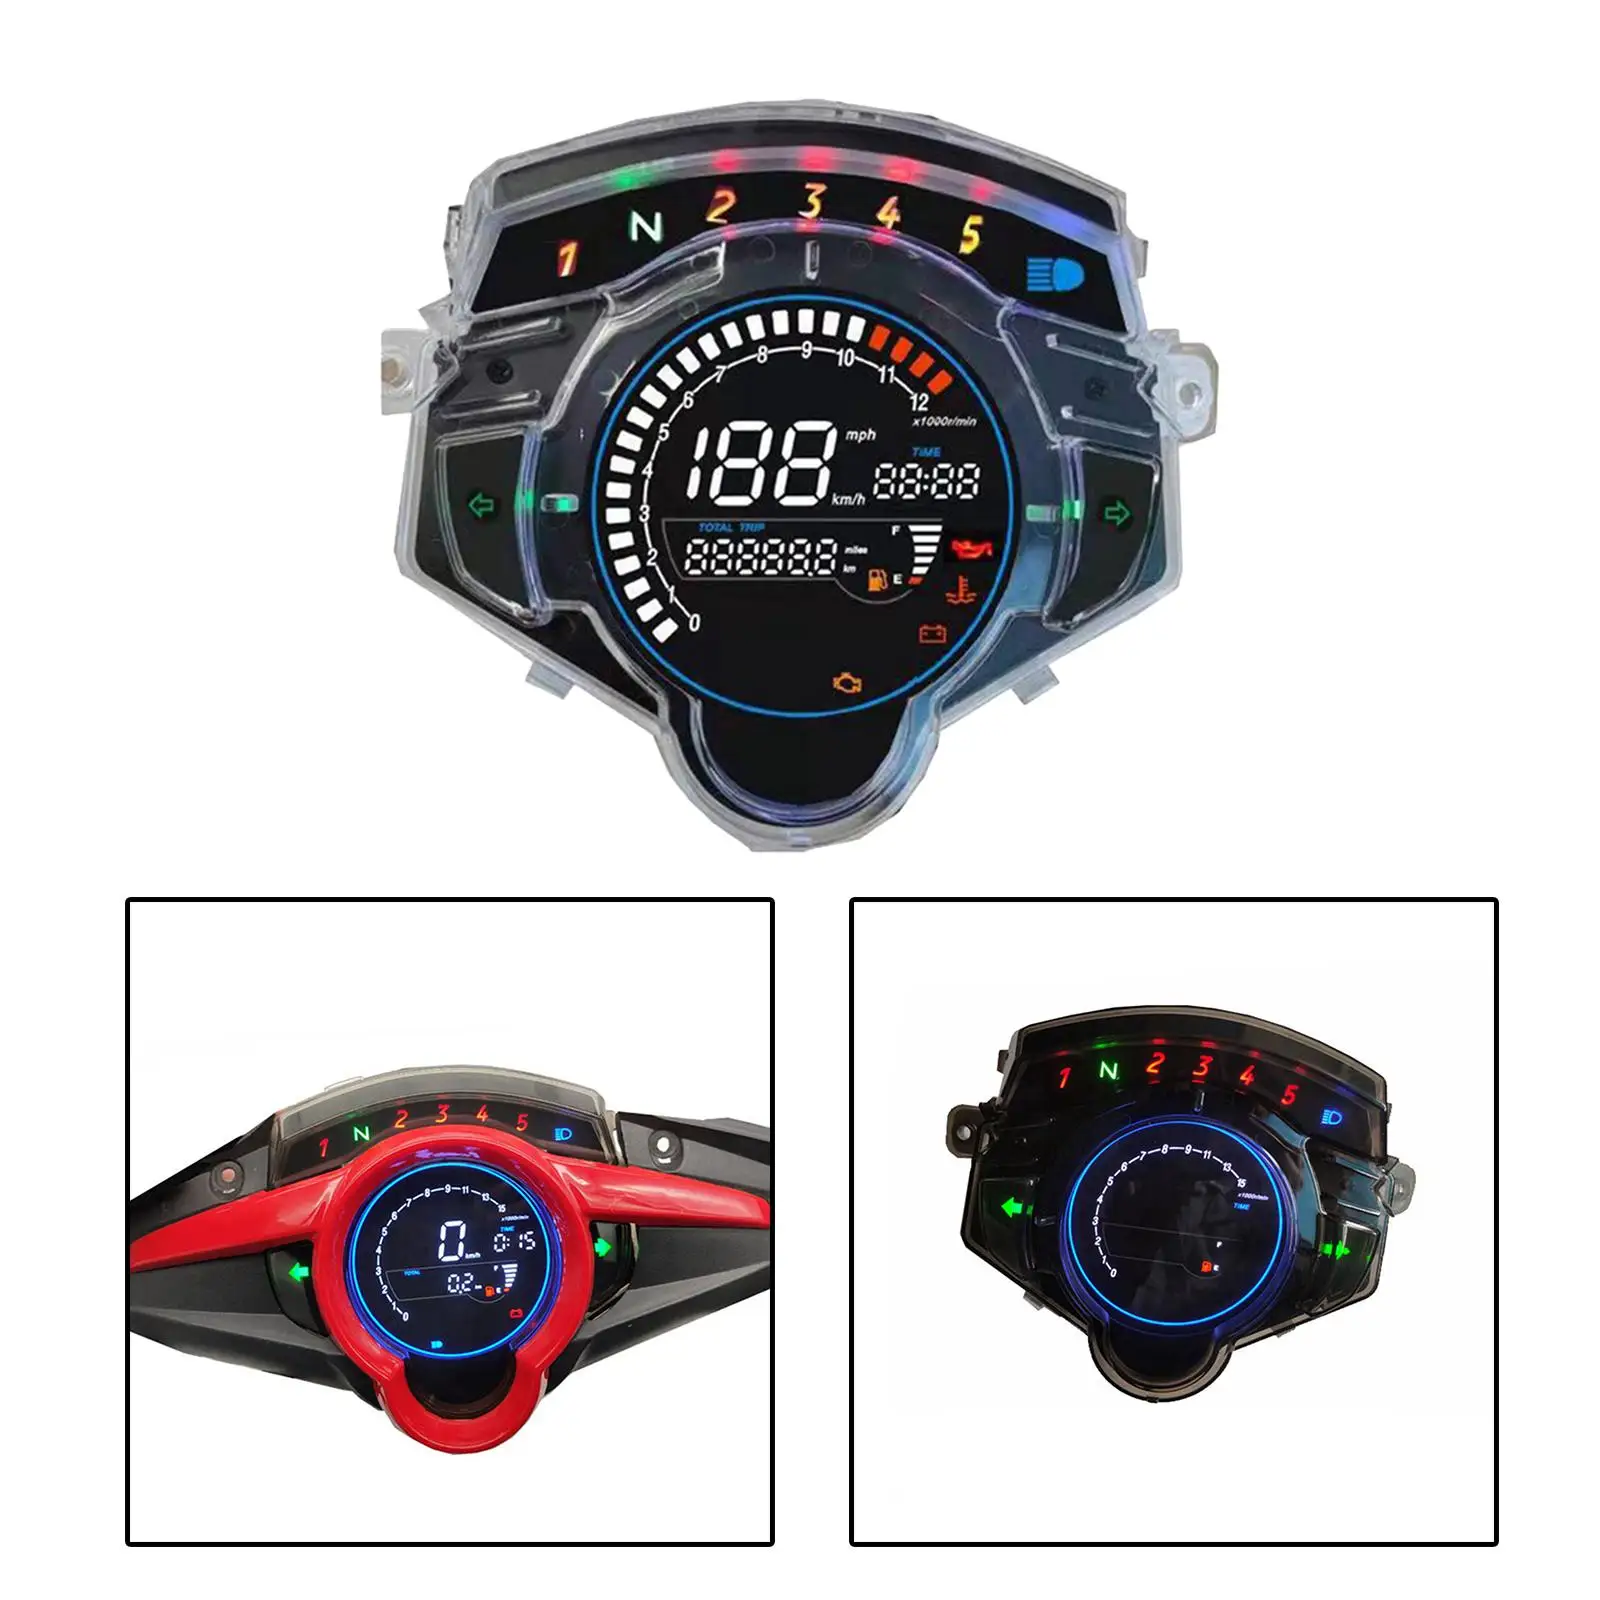 Motorcycle LED Speedometer Electronic Digital Gauge for Yamaha LC135 V4 V5 V6 V7 Quality Accessories Stable Performance